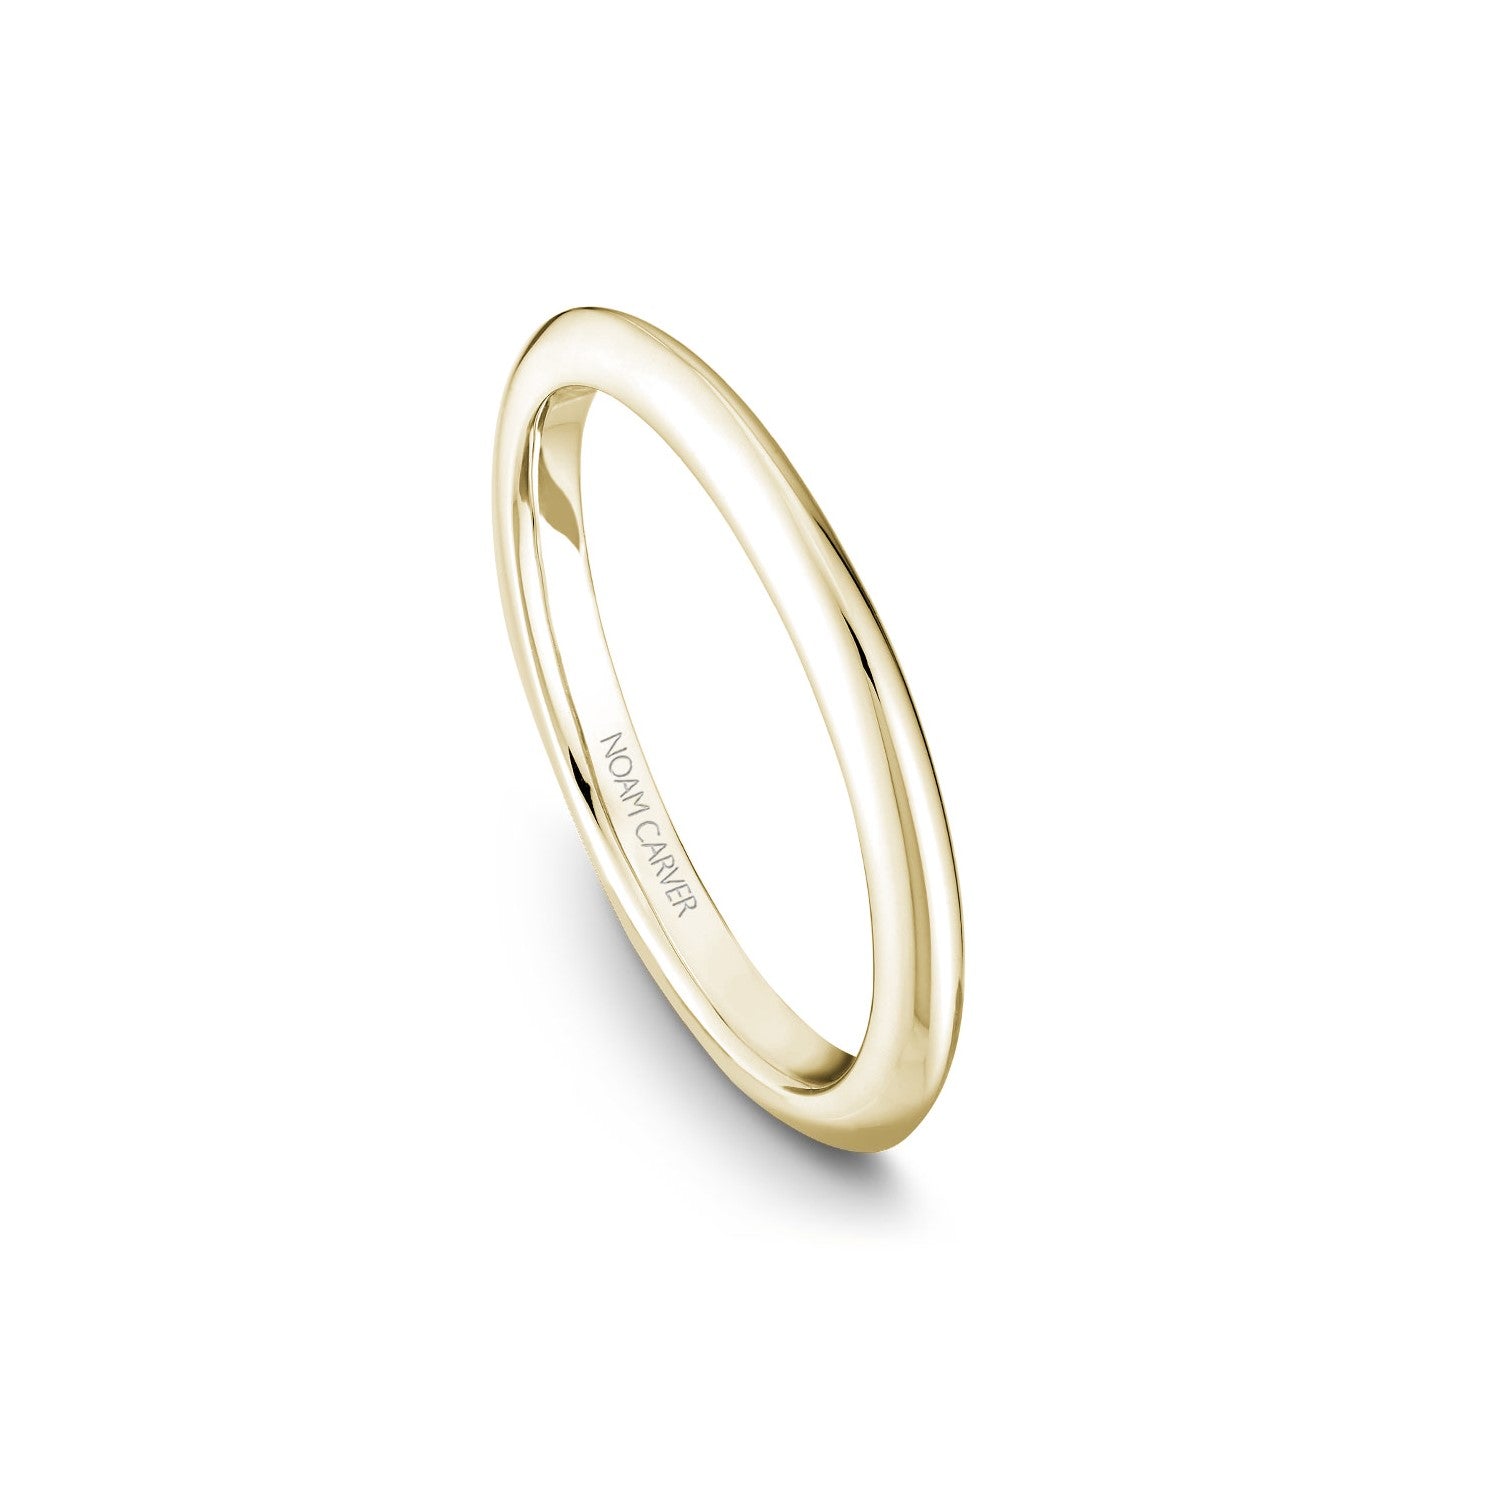 Noam Carver Marquise Diamond Engagement Ring